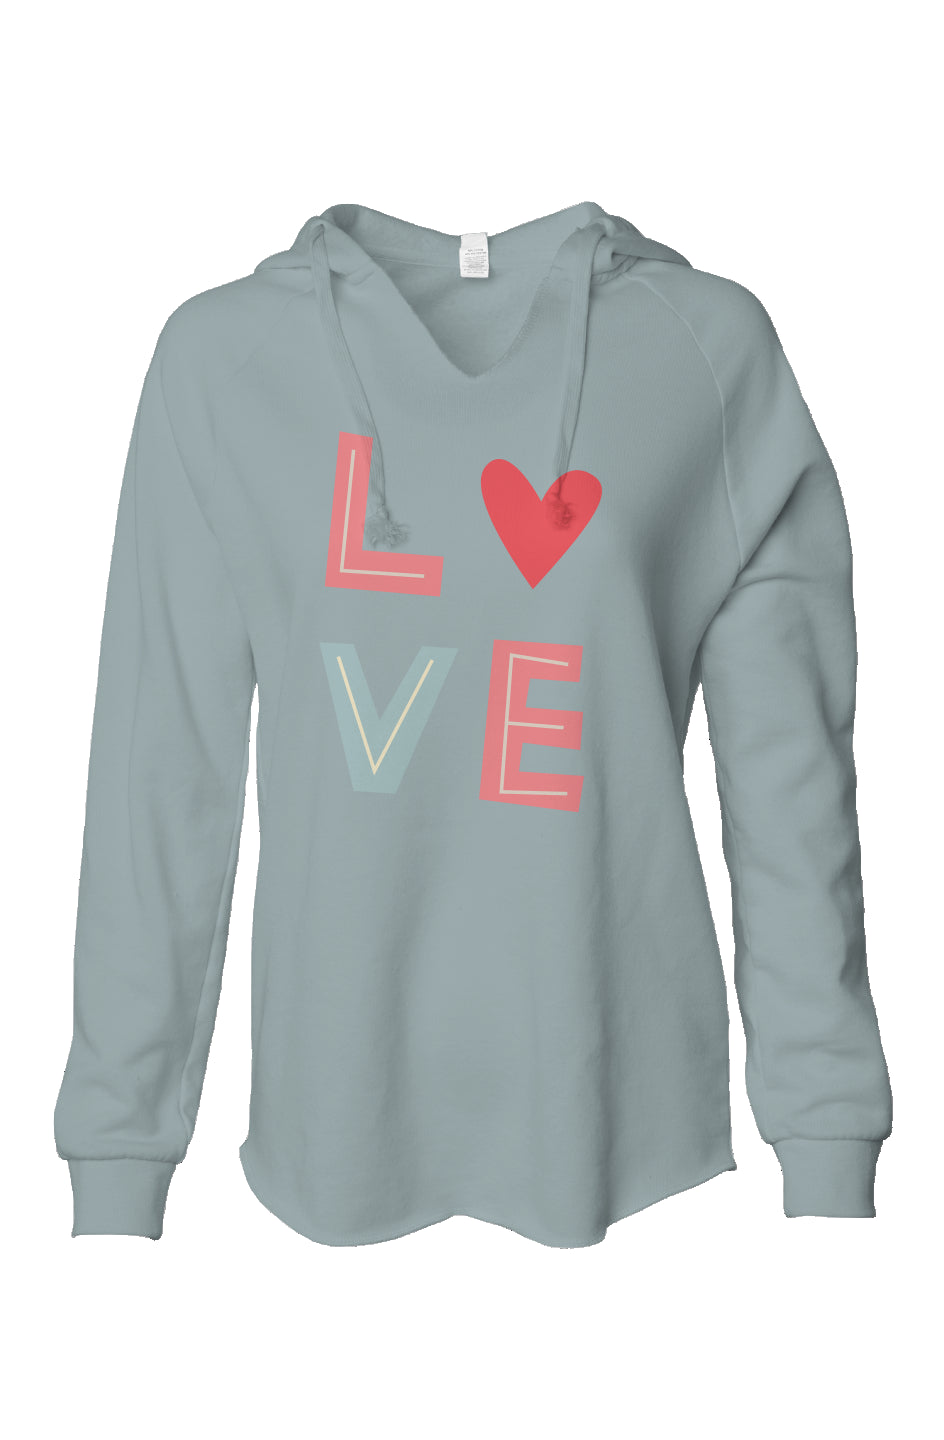 "LOVE" L-O-V-E- Sage Womens Lightweight Hooded Sweatshirt